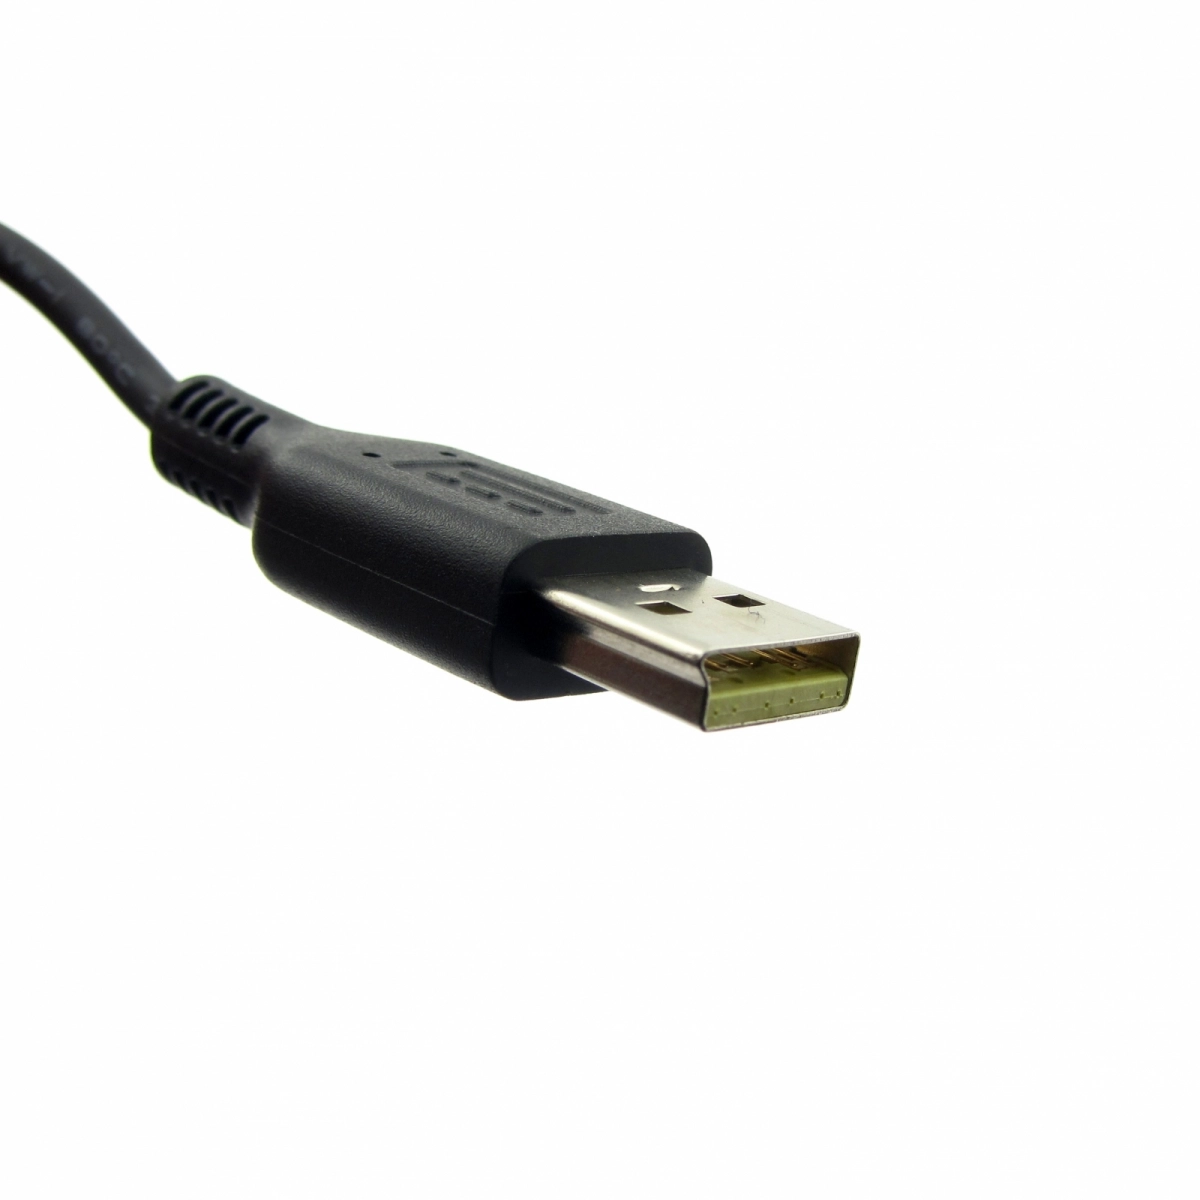 MTXtec Netzteil für LENOVO ADL40WDA, 20/5.2V, 2A, Stecker USB